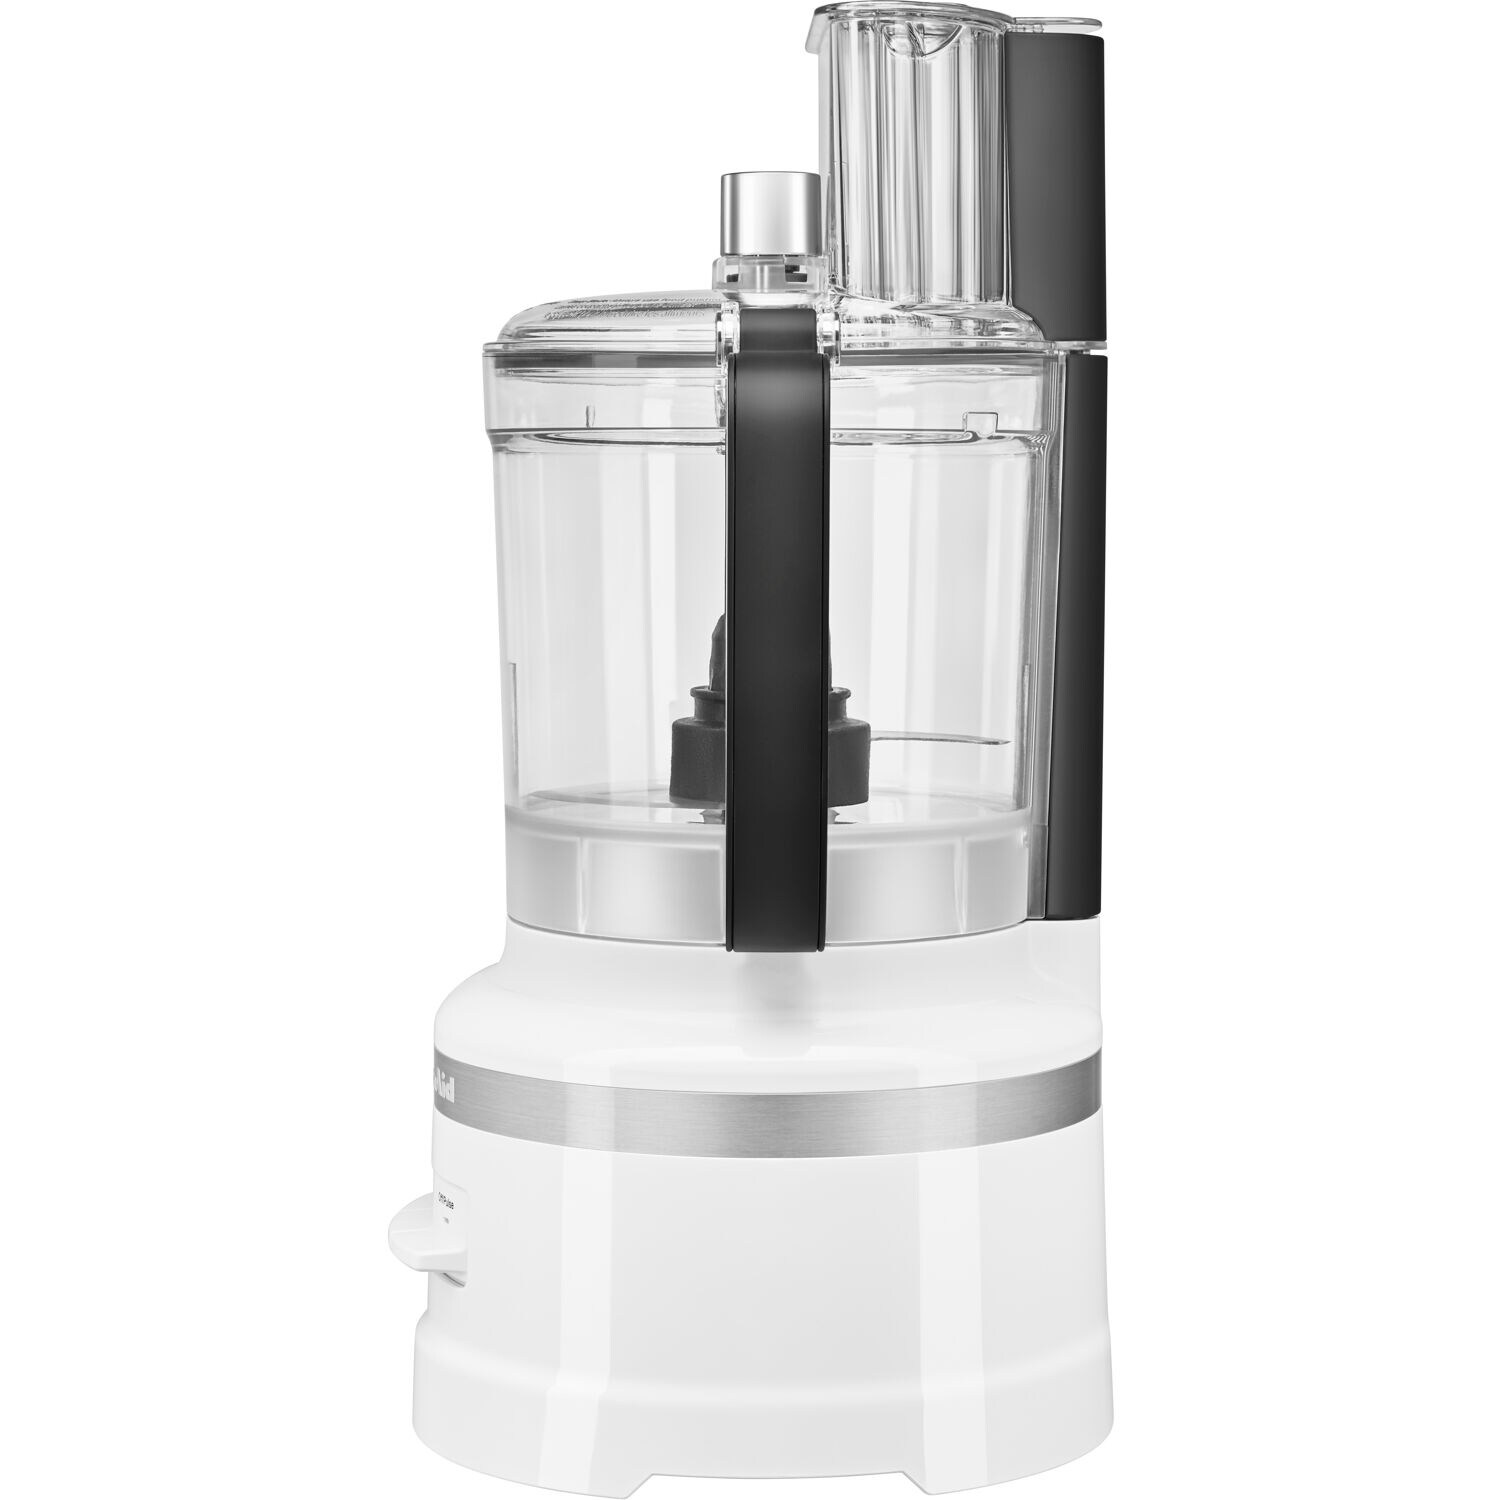 KitchenAid 13-Cup Food Processor in White